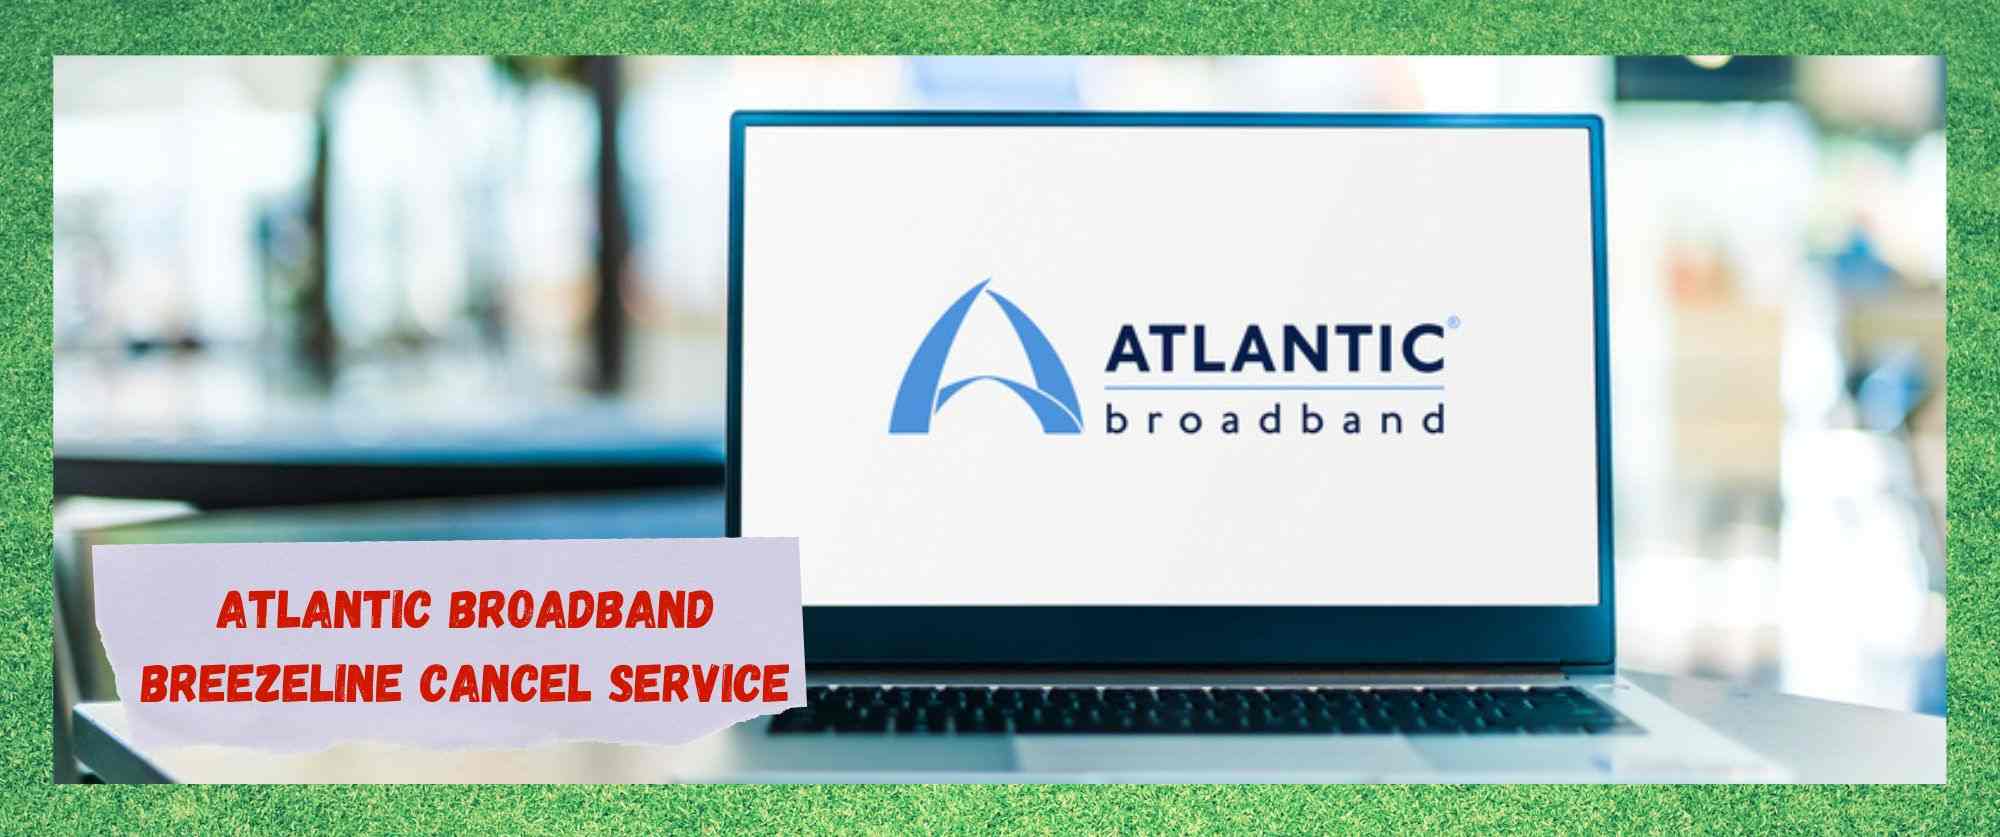 Peruuta Atlantic Broadband Breezeline -palvelu 8 nopeassa vaiheessa